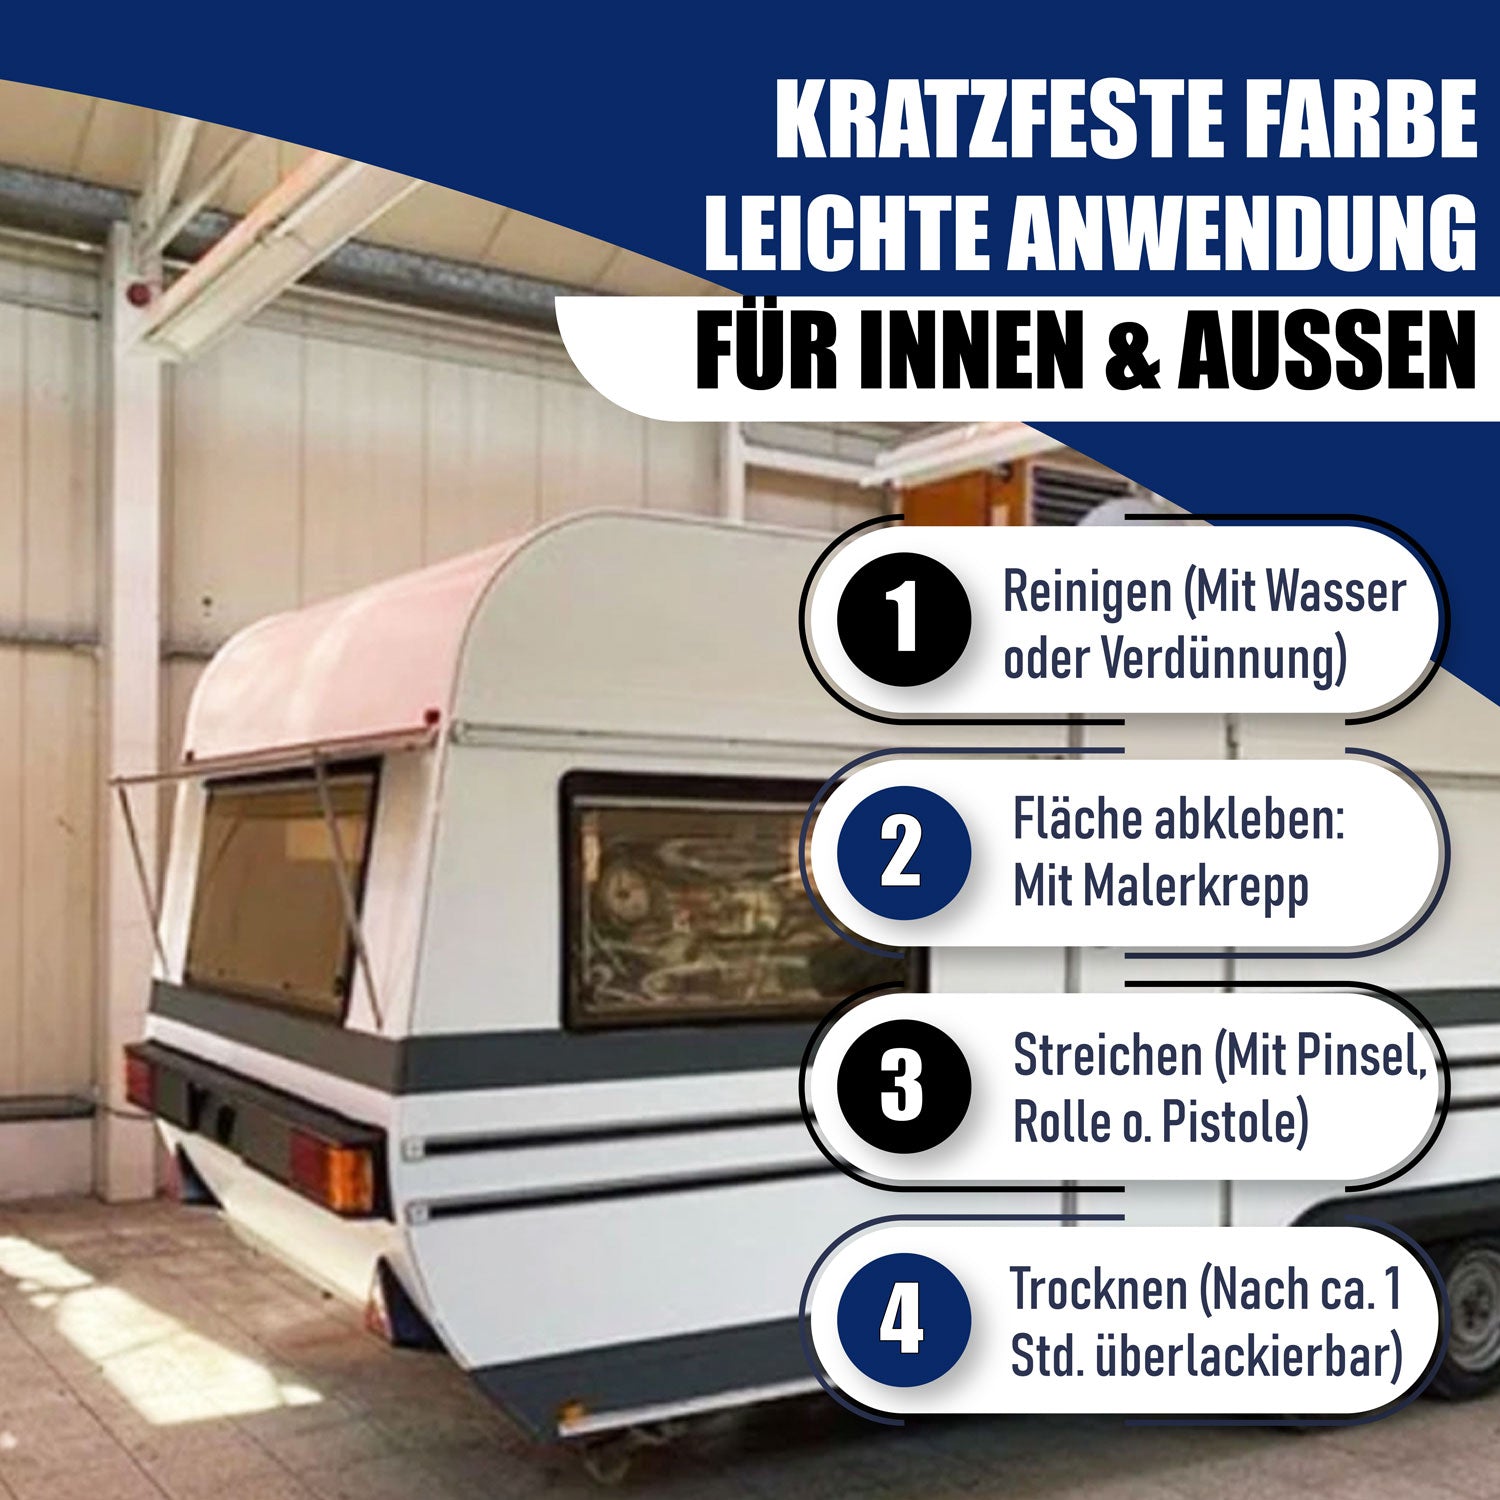 Hamburger Lack-Profi 2K Autolack in Orientrot RAL 3031 mit Lackierset (X300) & Verdünnung (1 L) - 30% Sparangebot